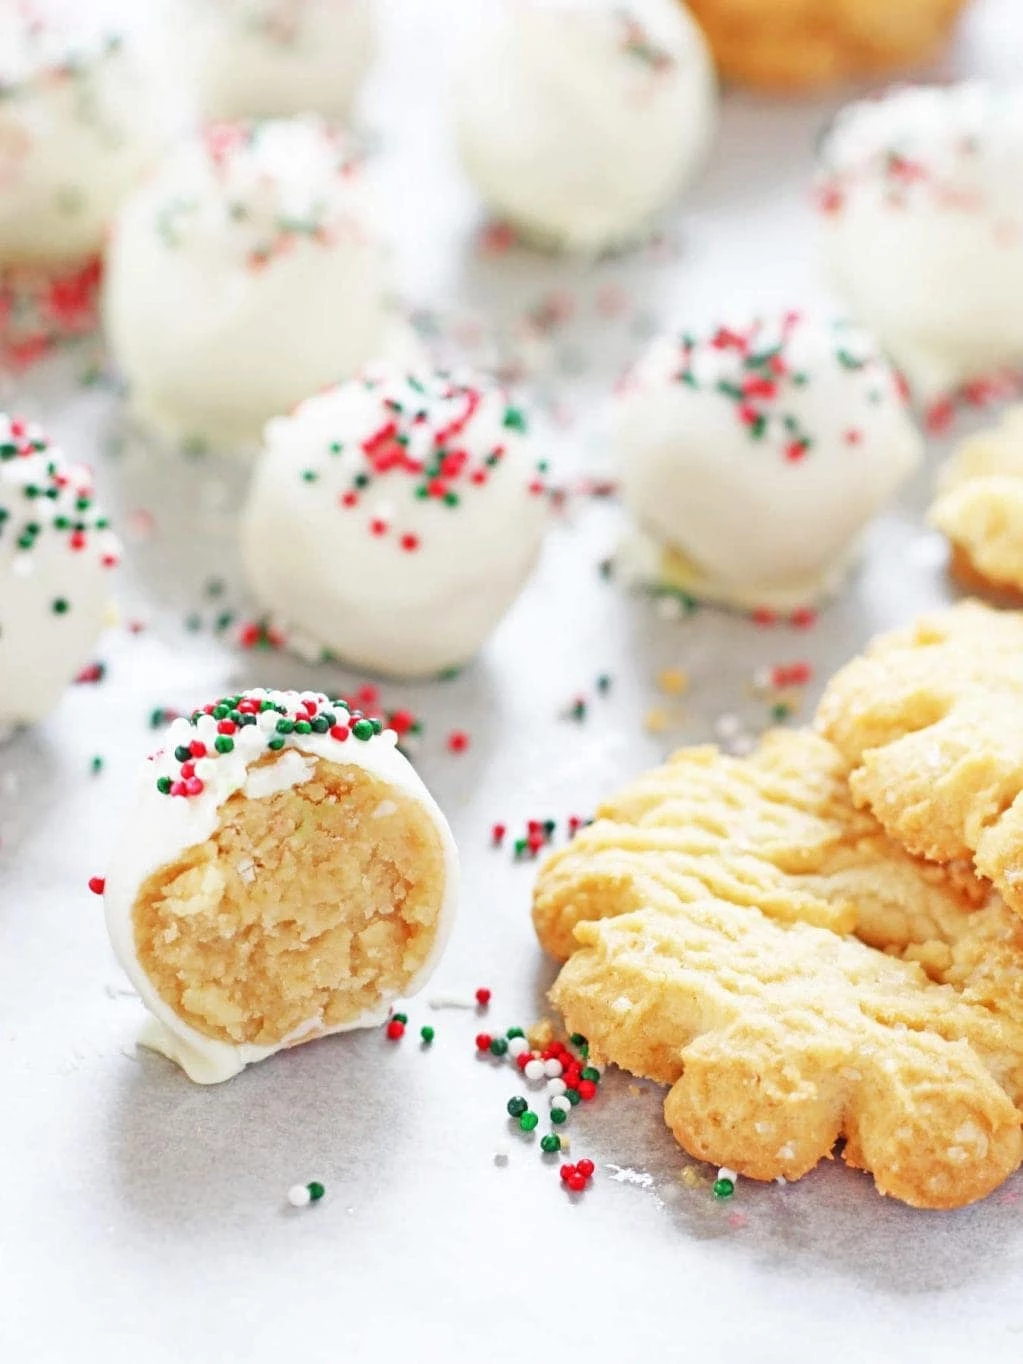 20 Festive Christmas Desserts - Christmas Sugar Cookie Truffles